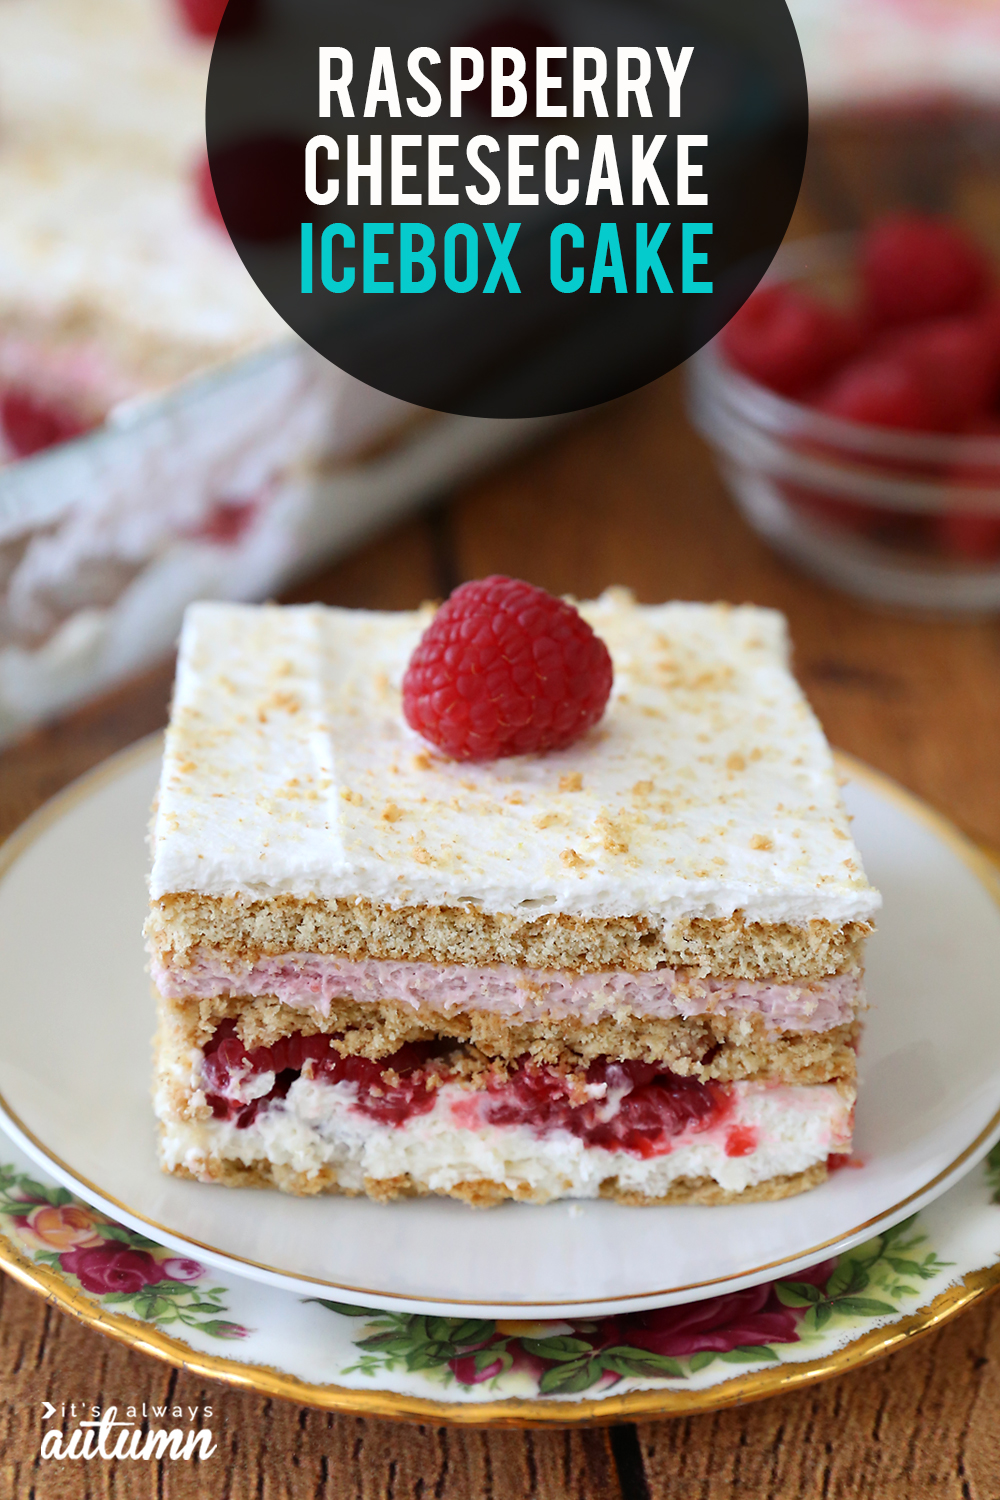 Raspberry cheesecake icebox cake